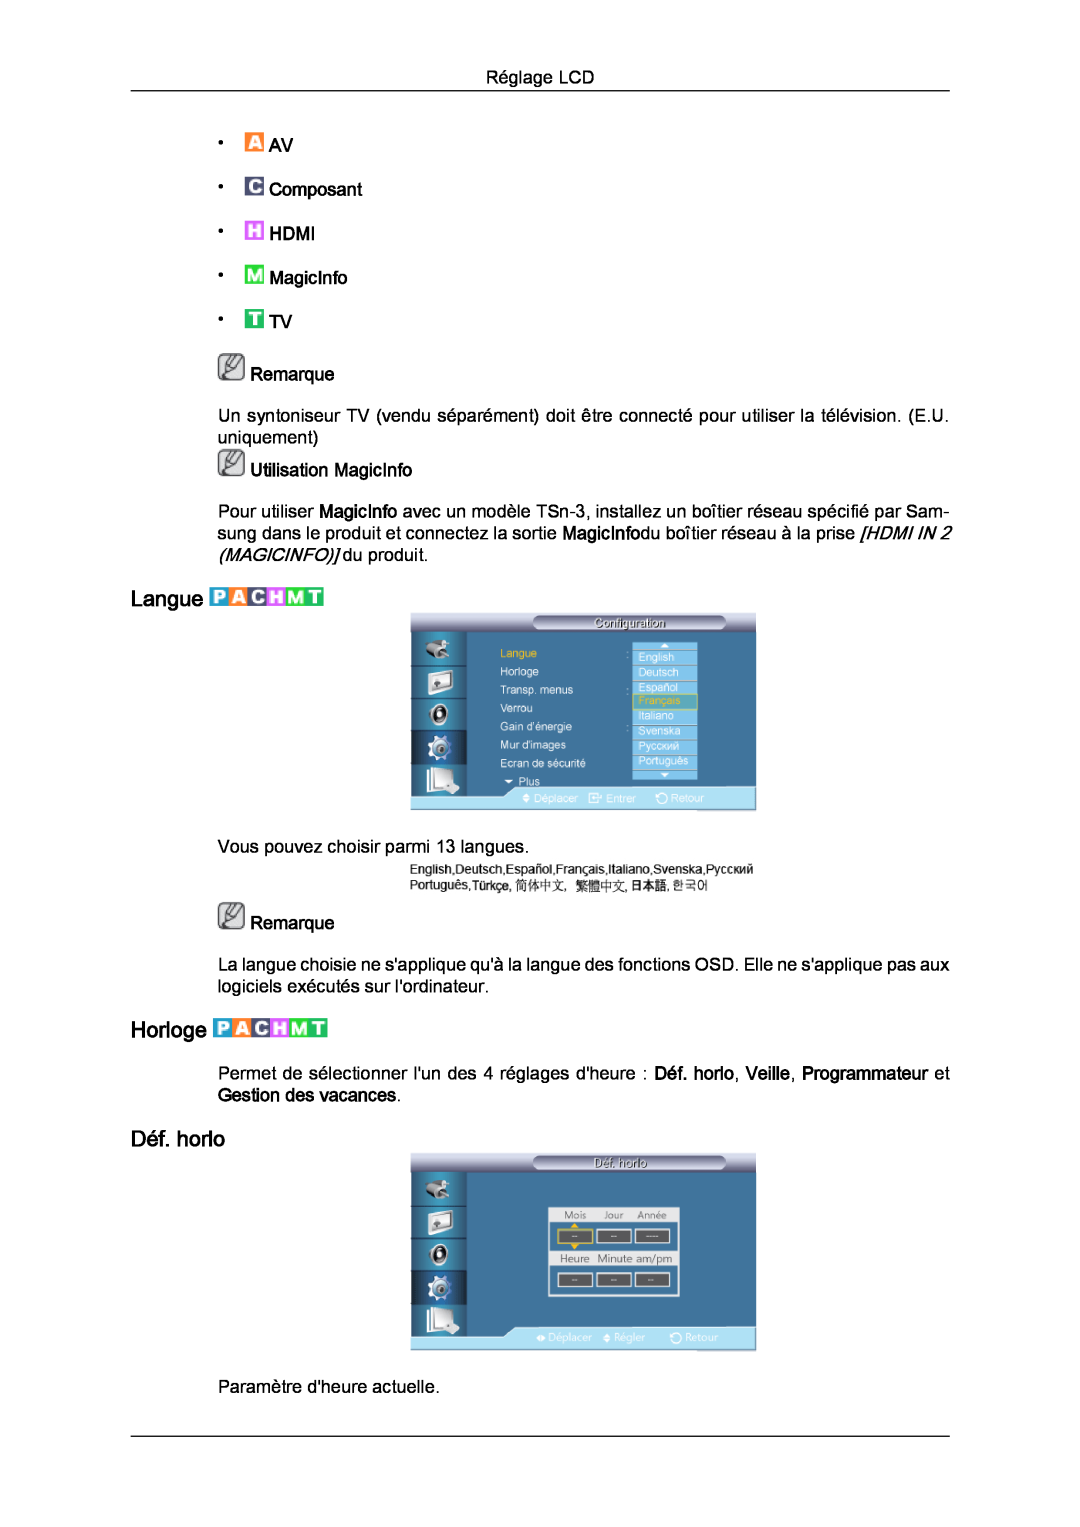 Samsung LH32CRSMBC/EN manual Langue, Horloge, Déf. horlo, AV Composant HDMI MagicInfo TV Remarque, Utilisation MagicInfo 